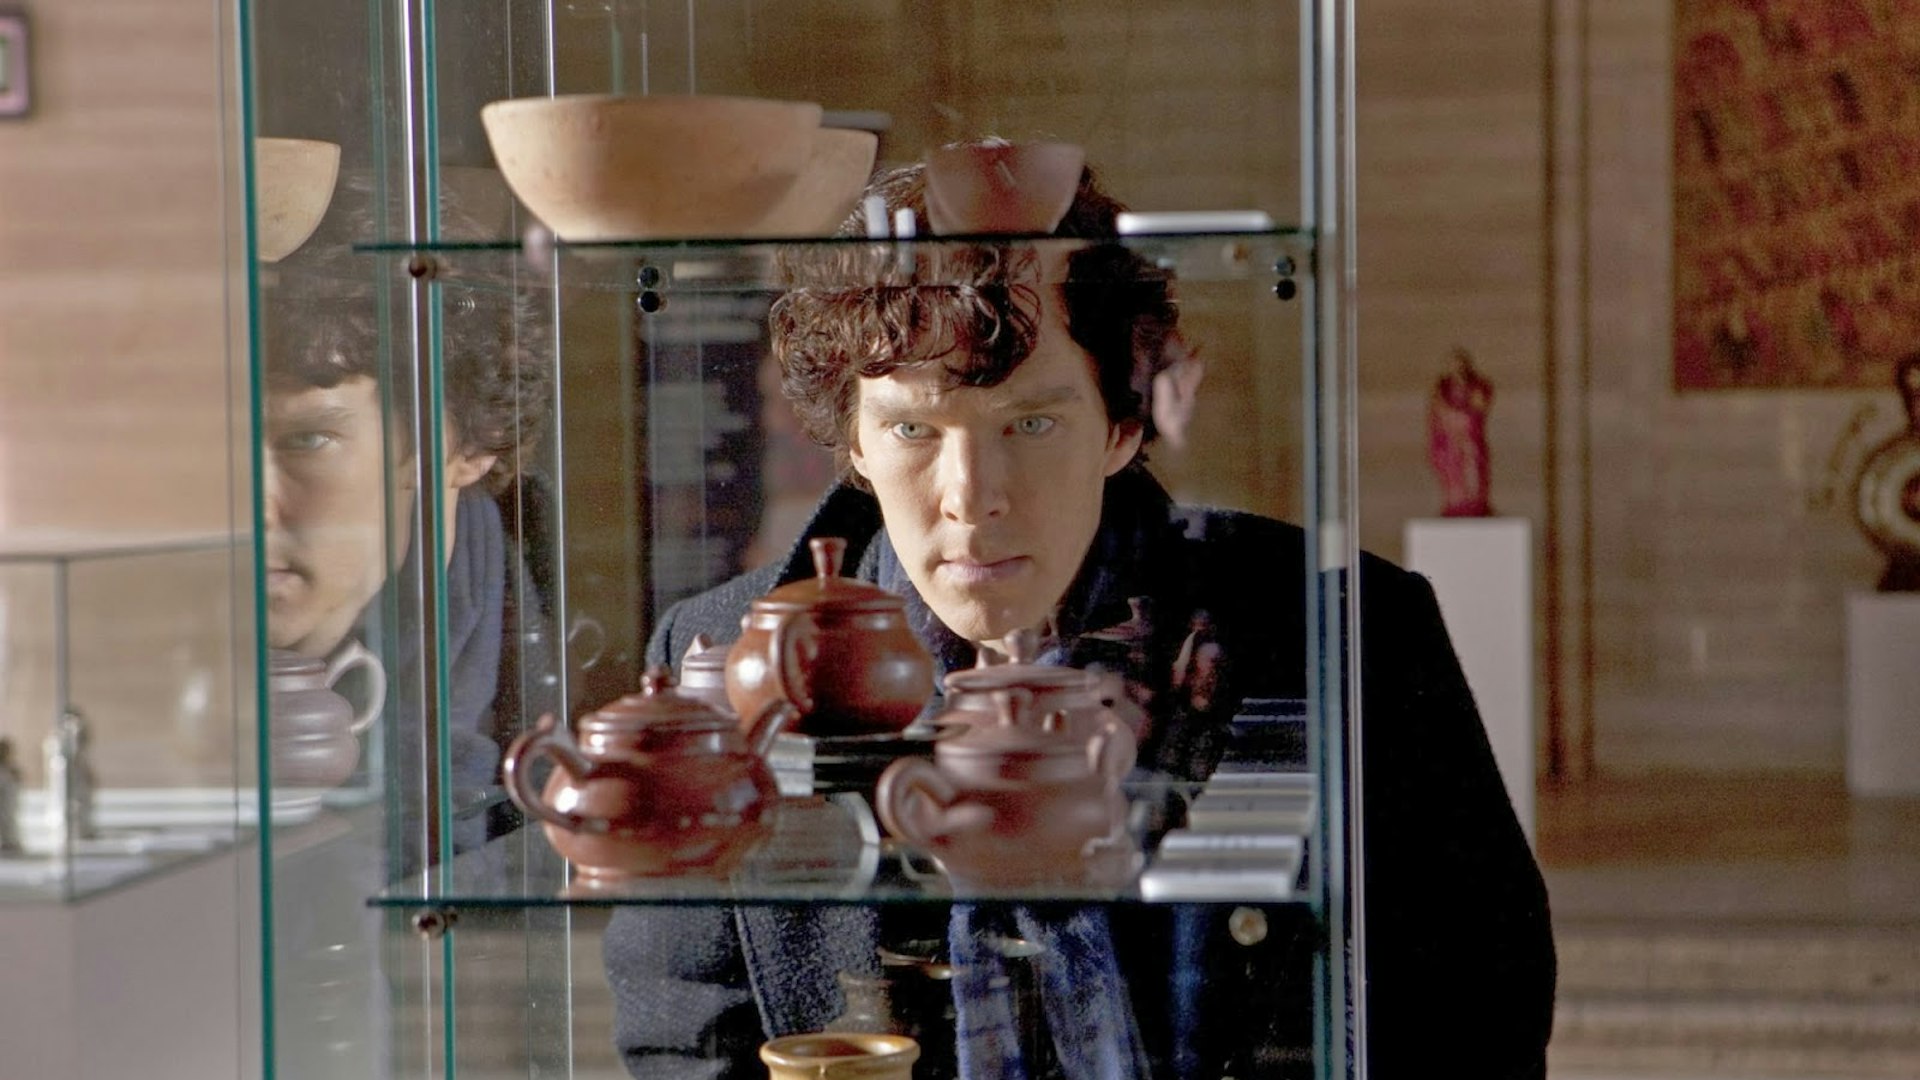 Benedict Cumberbatch as Sherlock Holmes studying Chinese Ming pottery in BBC Sherlock Season 1 Episode 2 The Blind Banker